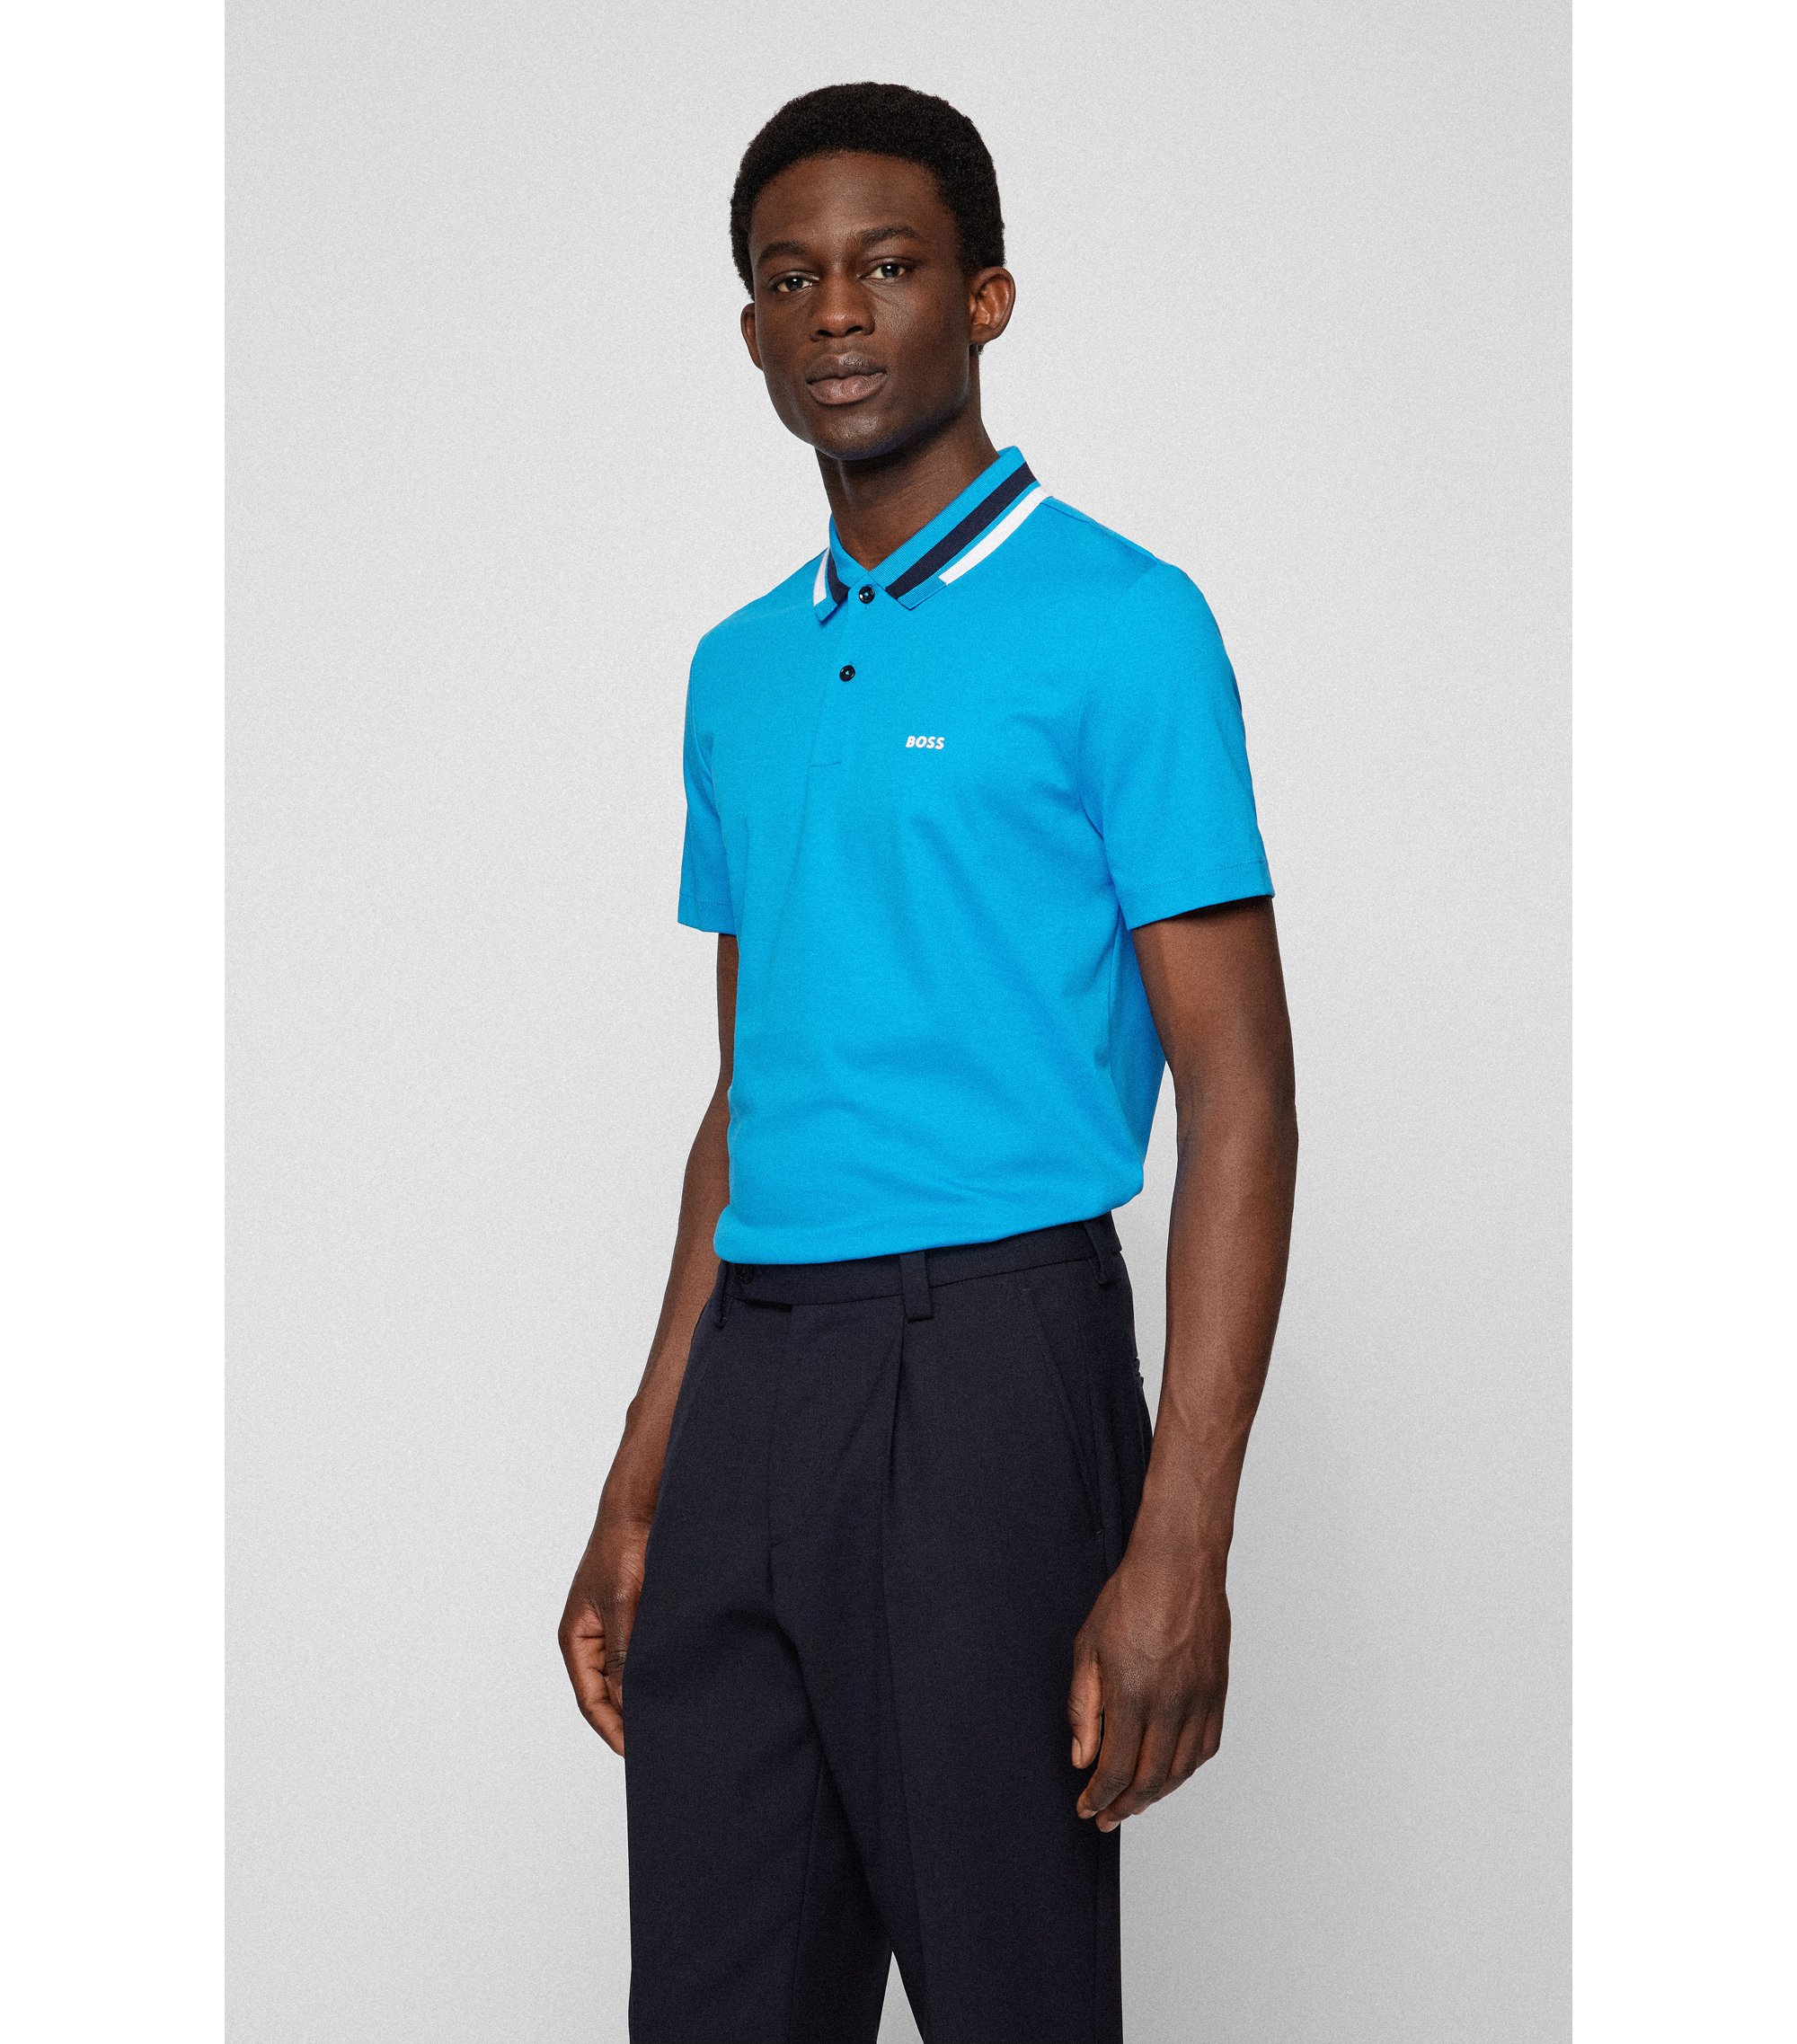 Hugo Boss Polo Men cotton polyester mix Regular fit ShortSleeve color Blue